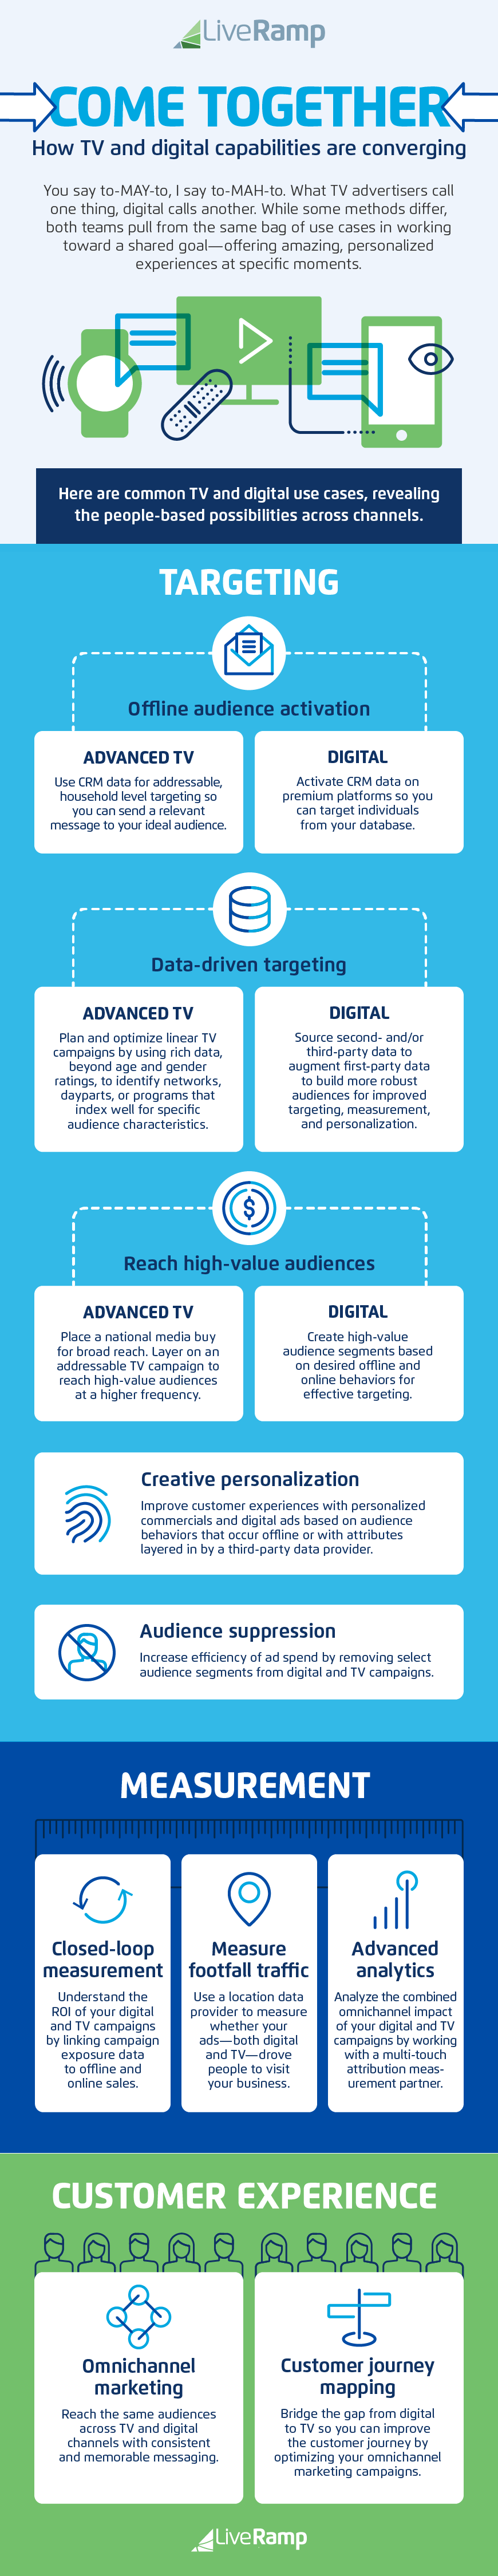 television advertising vs digital advertising capabilities